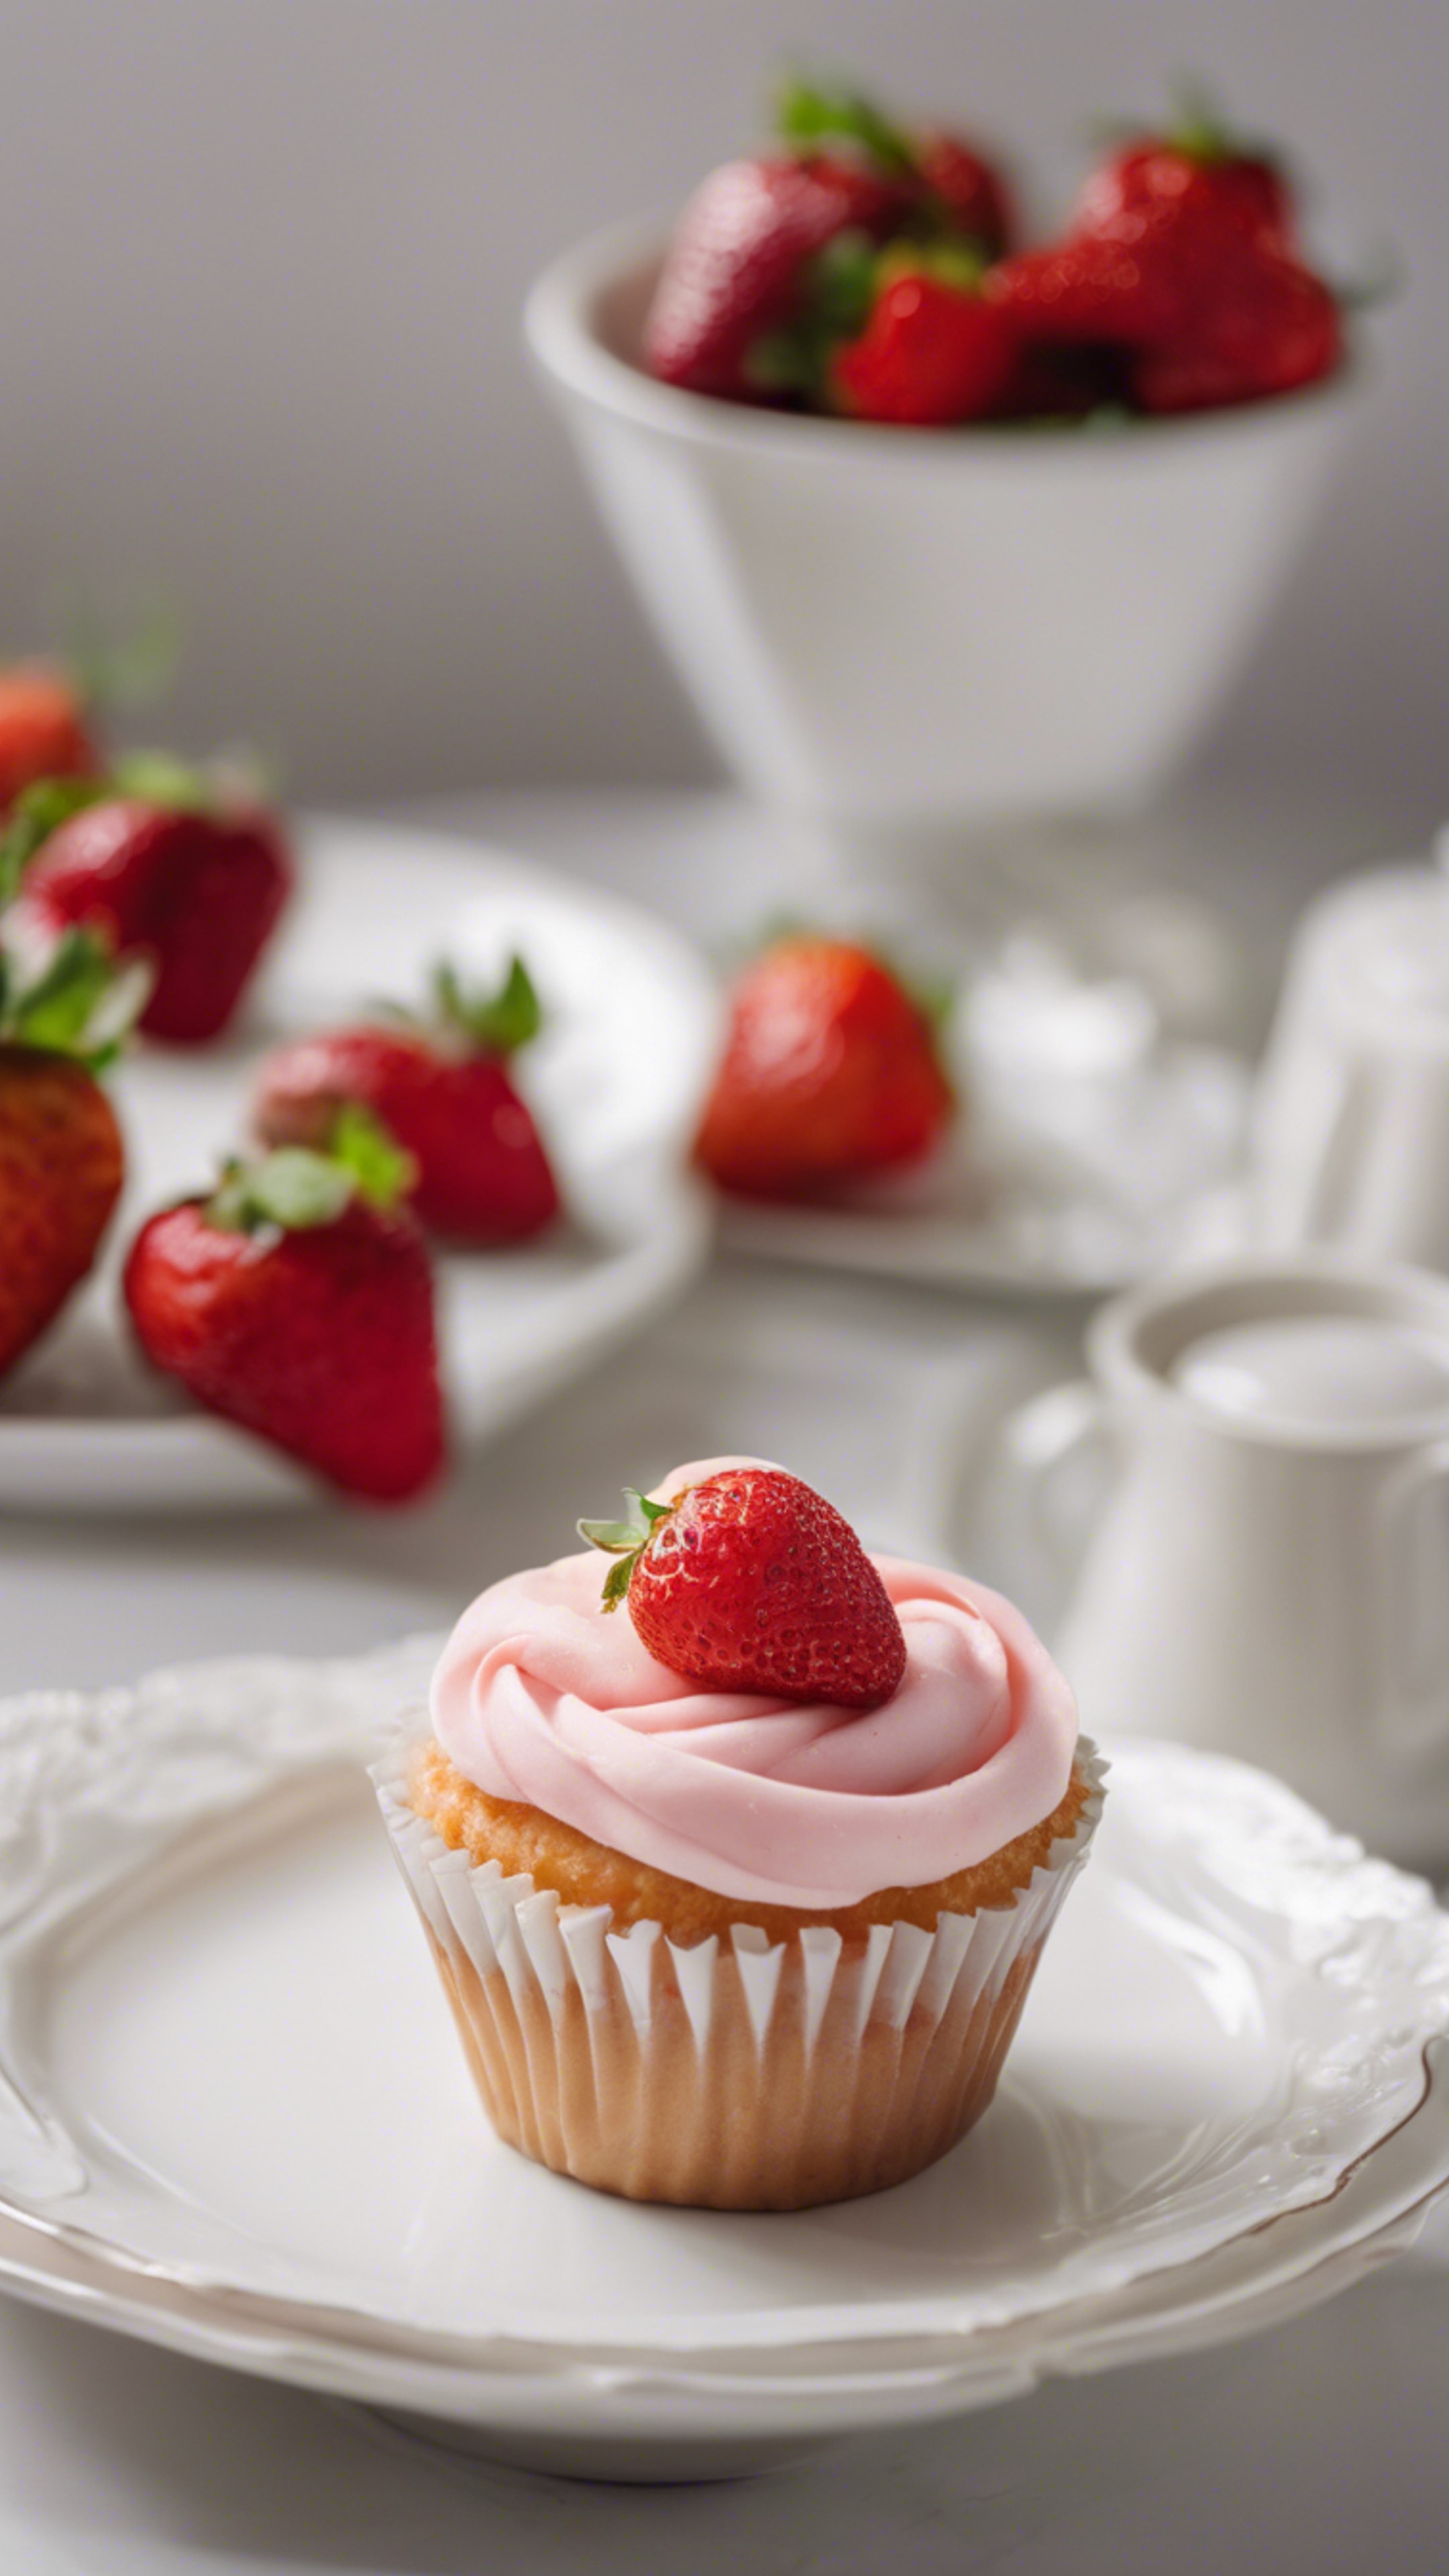 A single strawberry cupcake on a white porcelain plate in bright daylight. ផ្ទាំង​រូបភាព[ddcb3576222e4604b5c8]